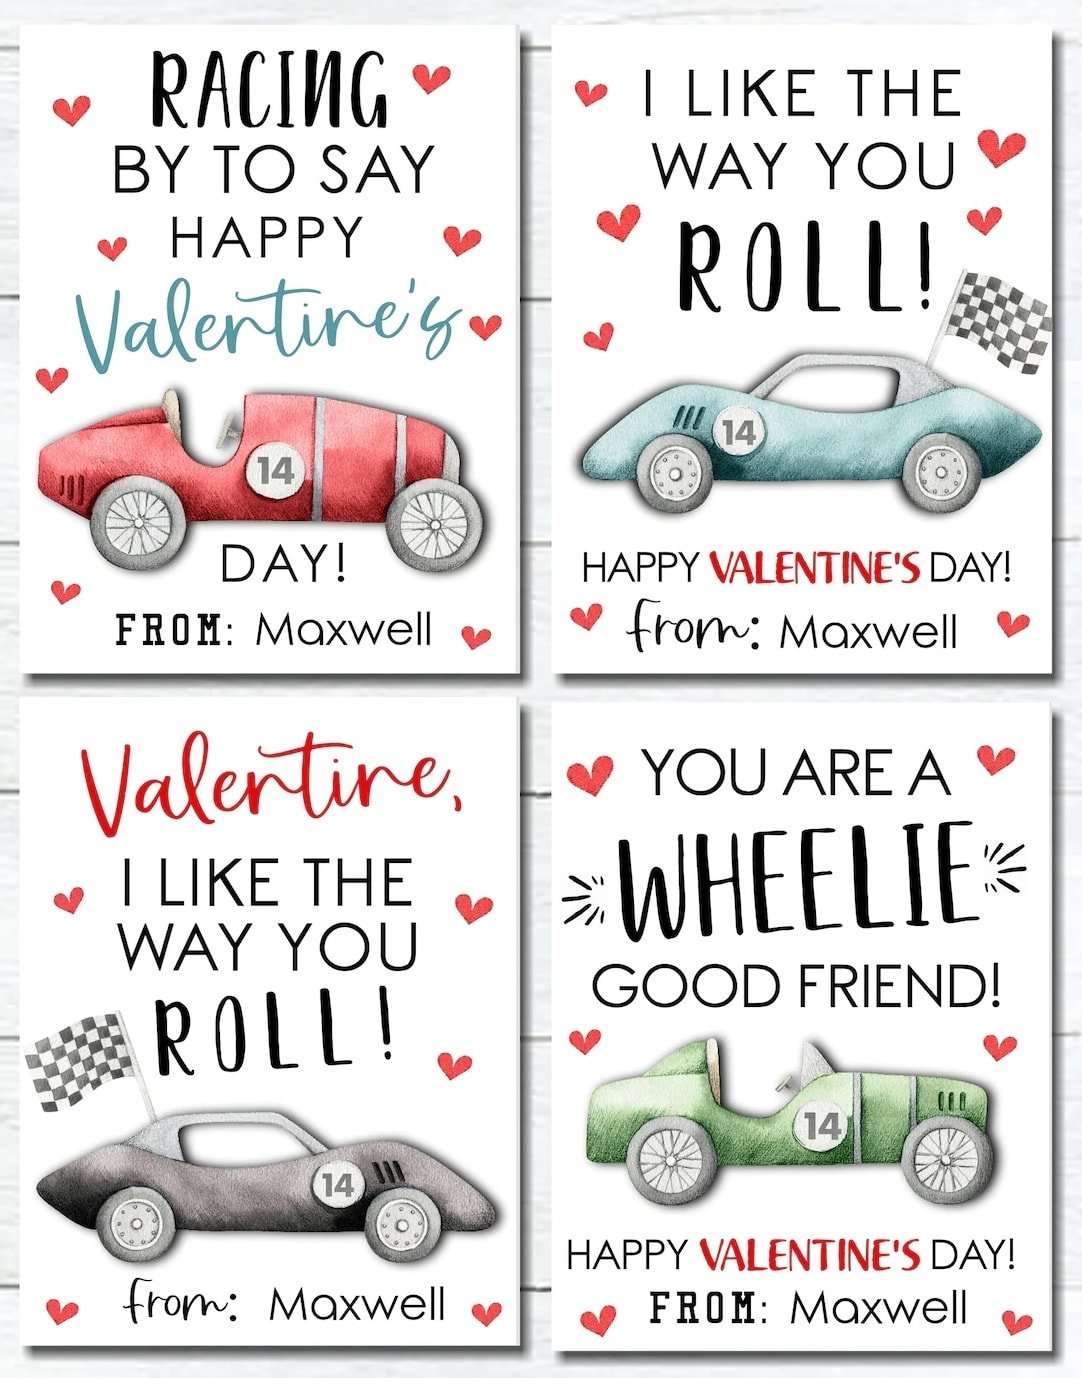 Race car Valentine card 